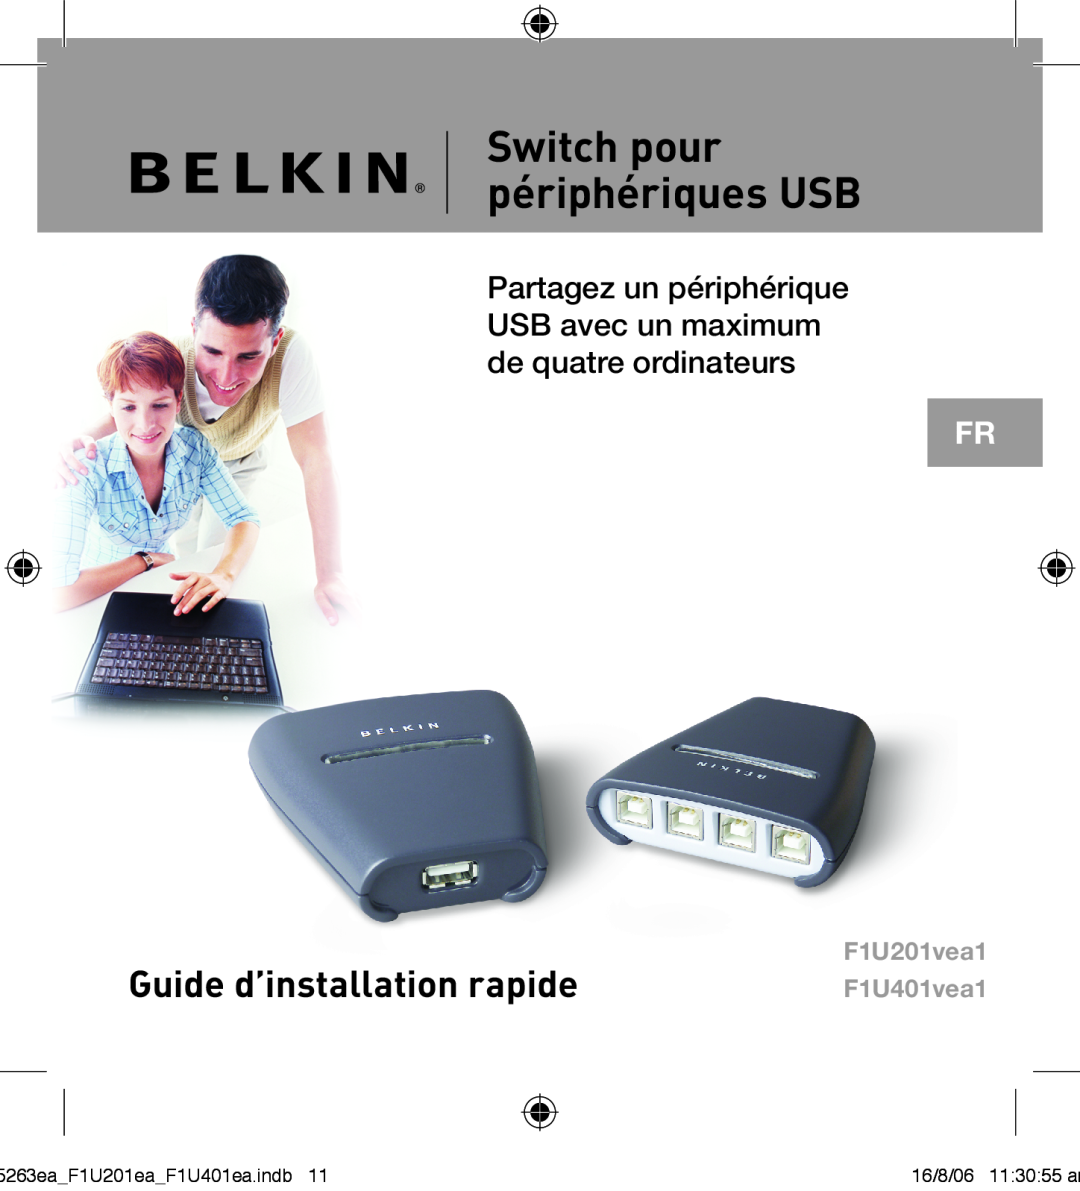 Belkin F1U201VEA1 manual Switch pour périphériques USB, Guide d’installation rapide, F1U201vea1 F1U401vea1 